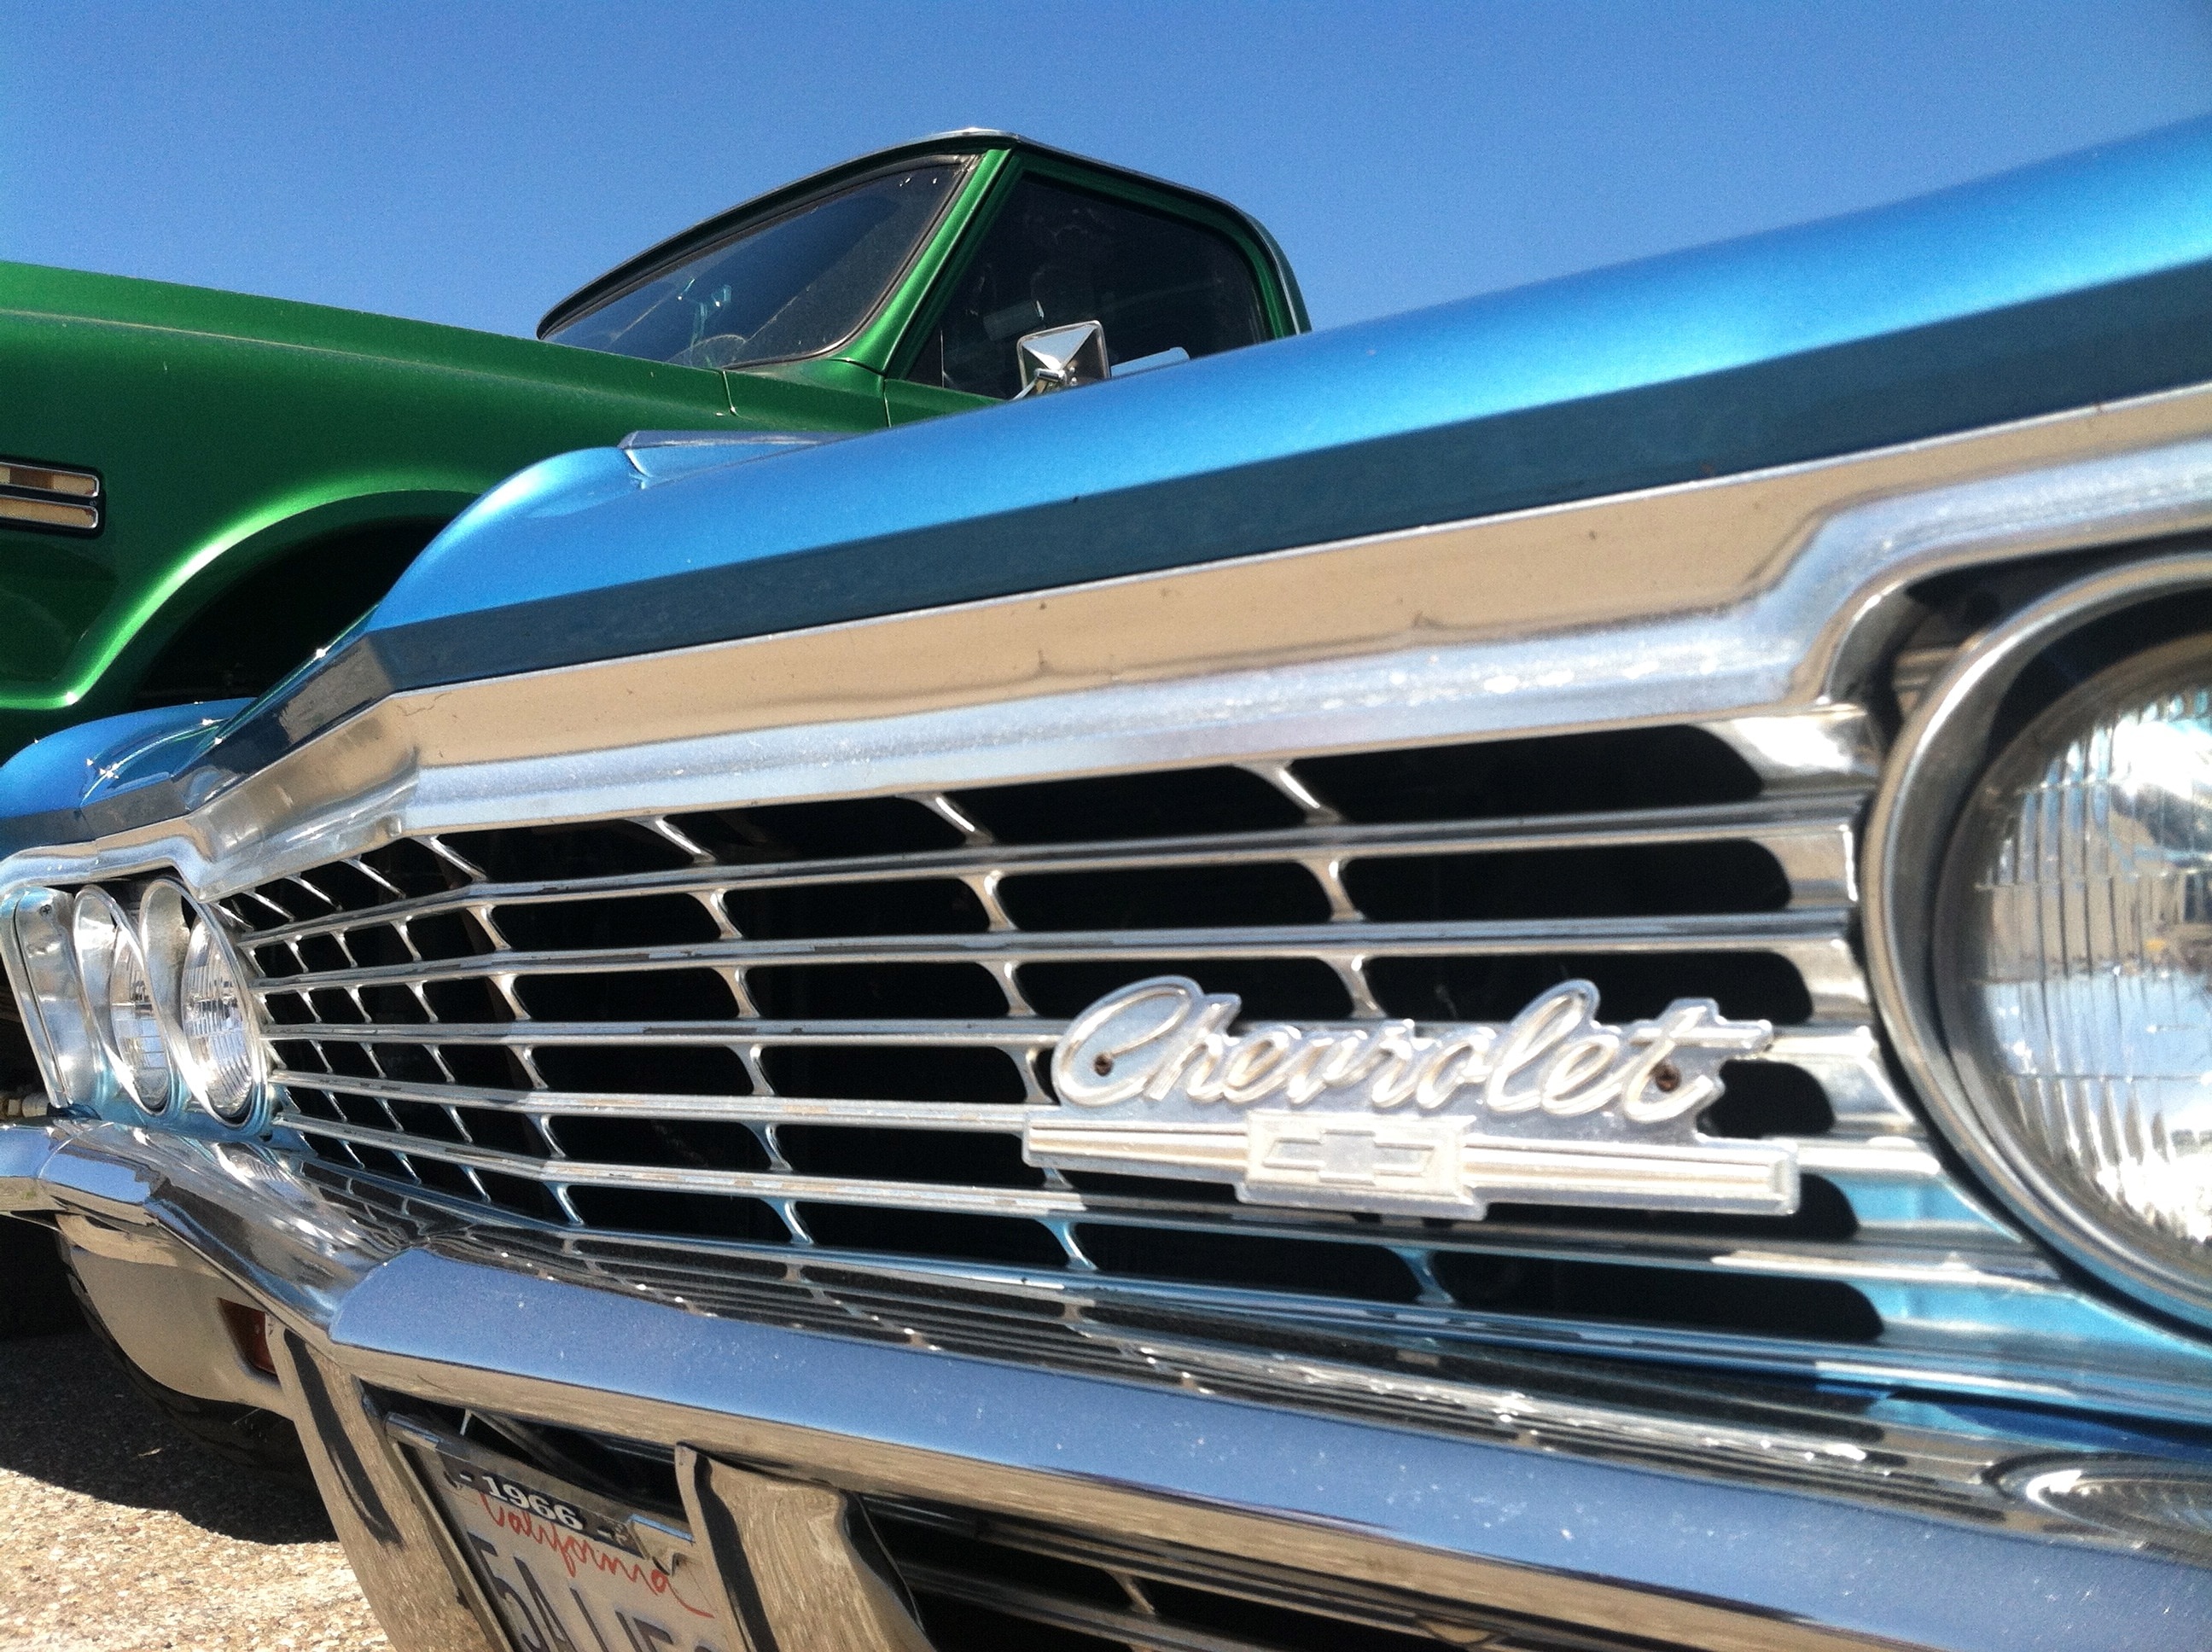 Chevrolet car beside green pickup truck under blue clear sky